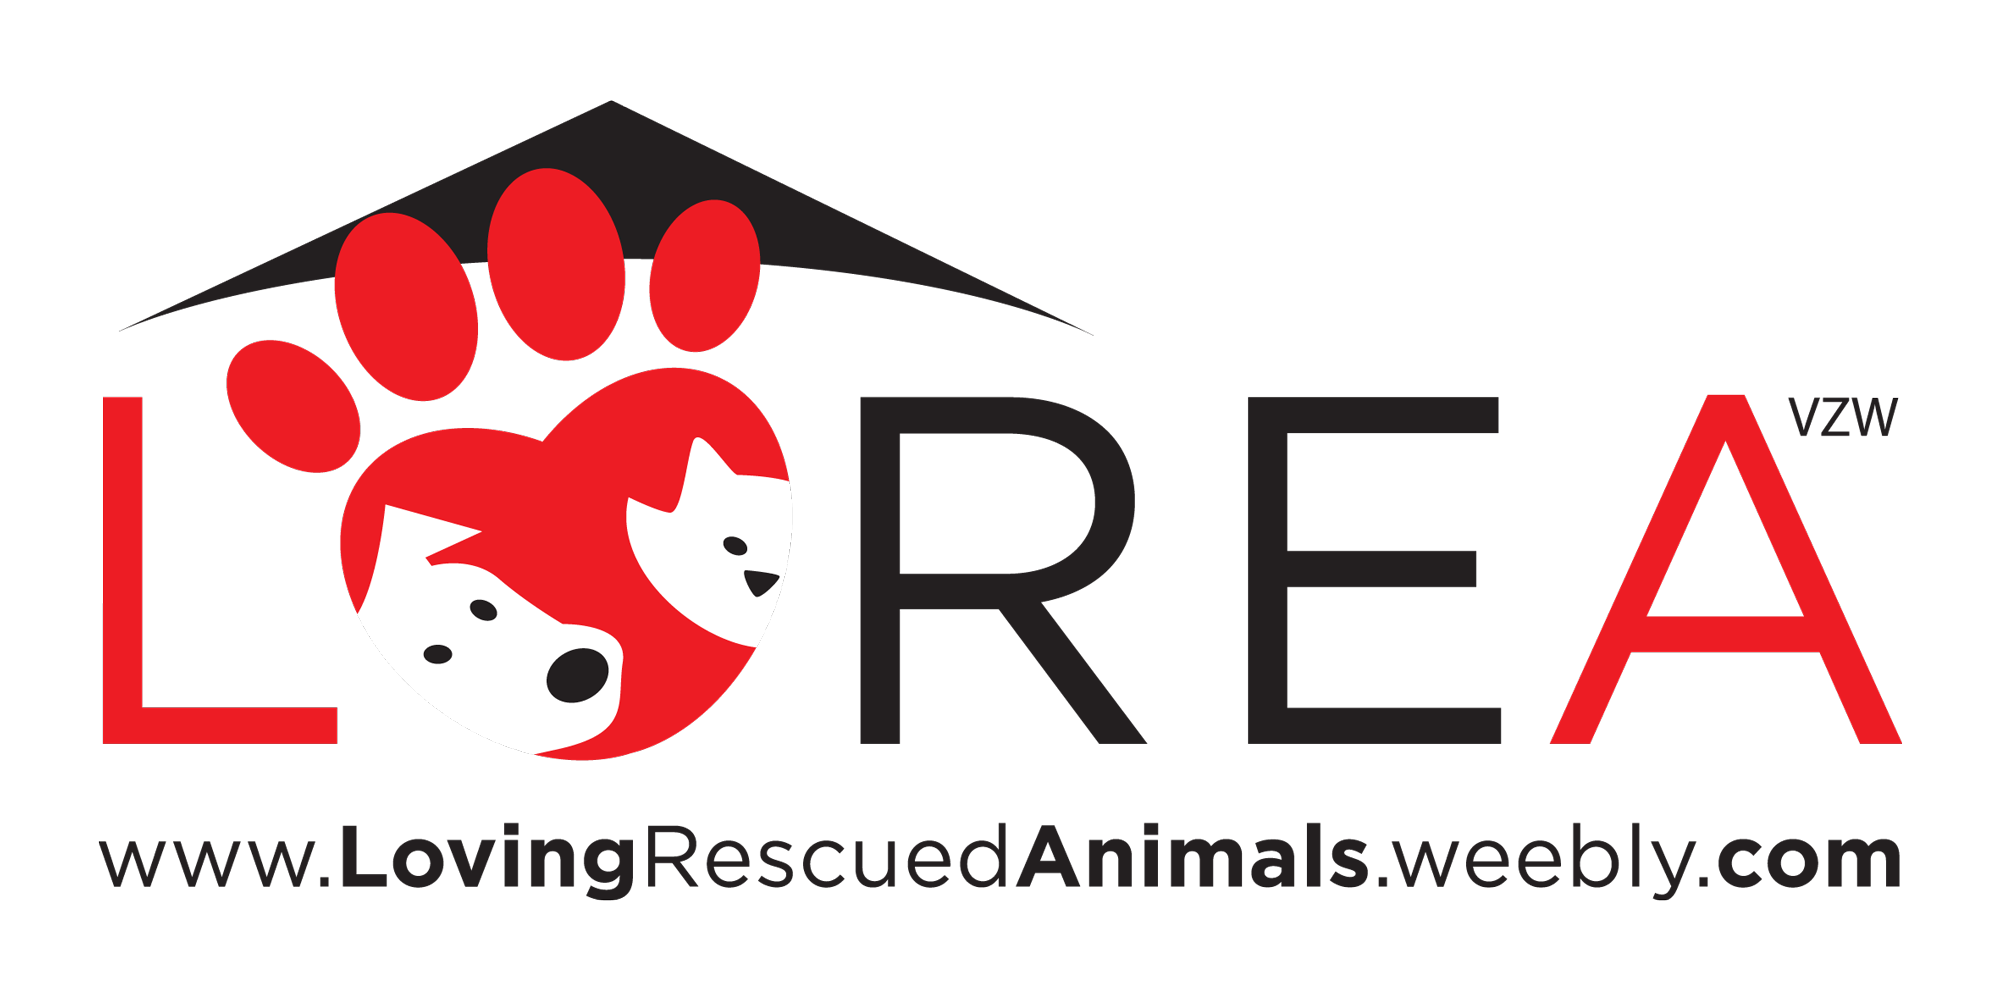 vzw Loving Rescued Animals